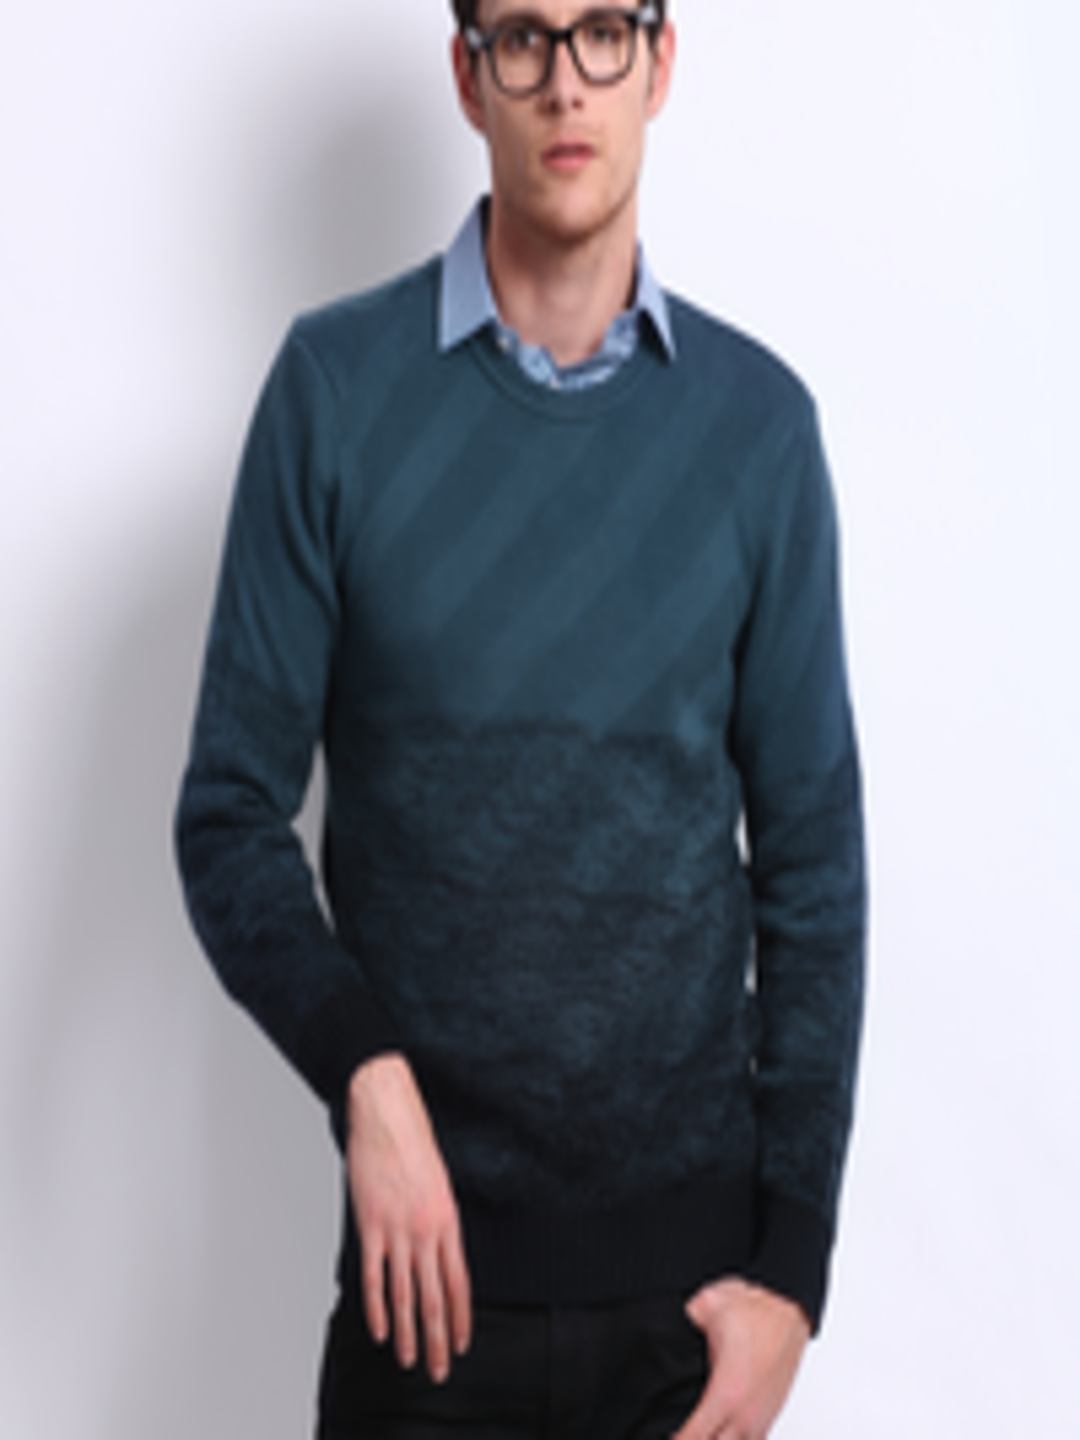 Buy Levis Men Teal Blue & Navy Sweater - Sweaters for Men 223300 | Myntra